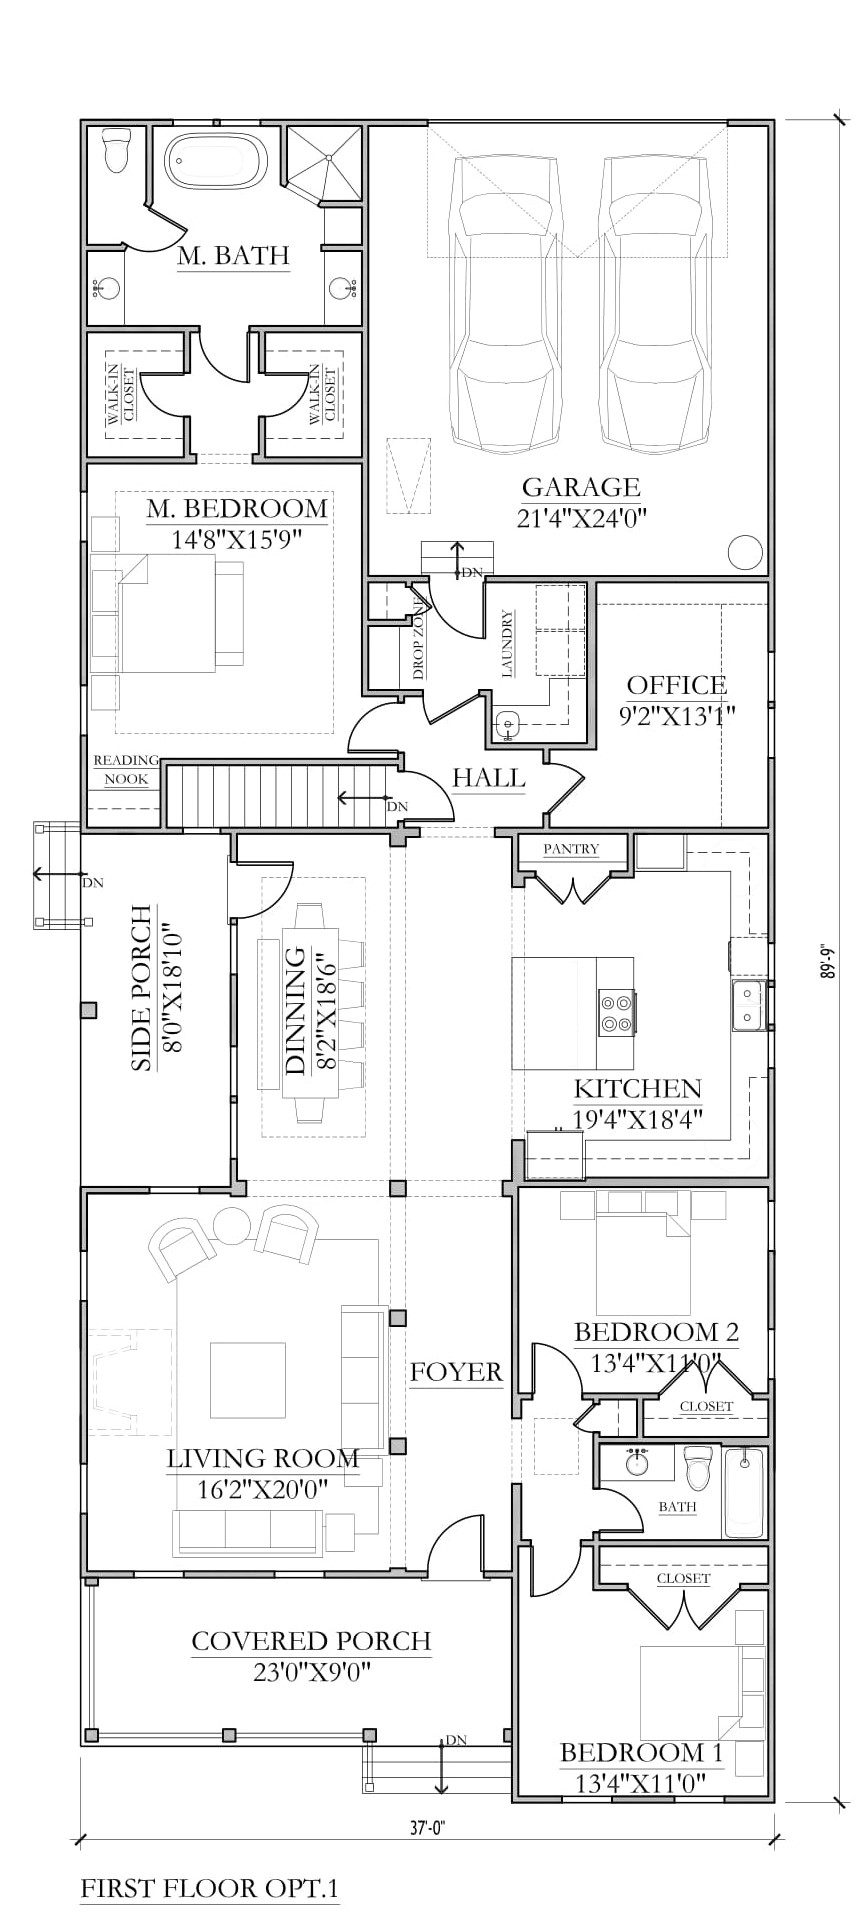 Floor Plan option 1